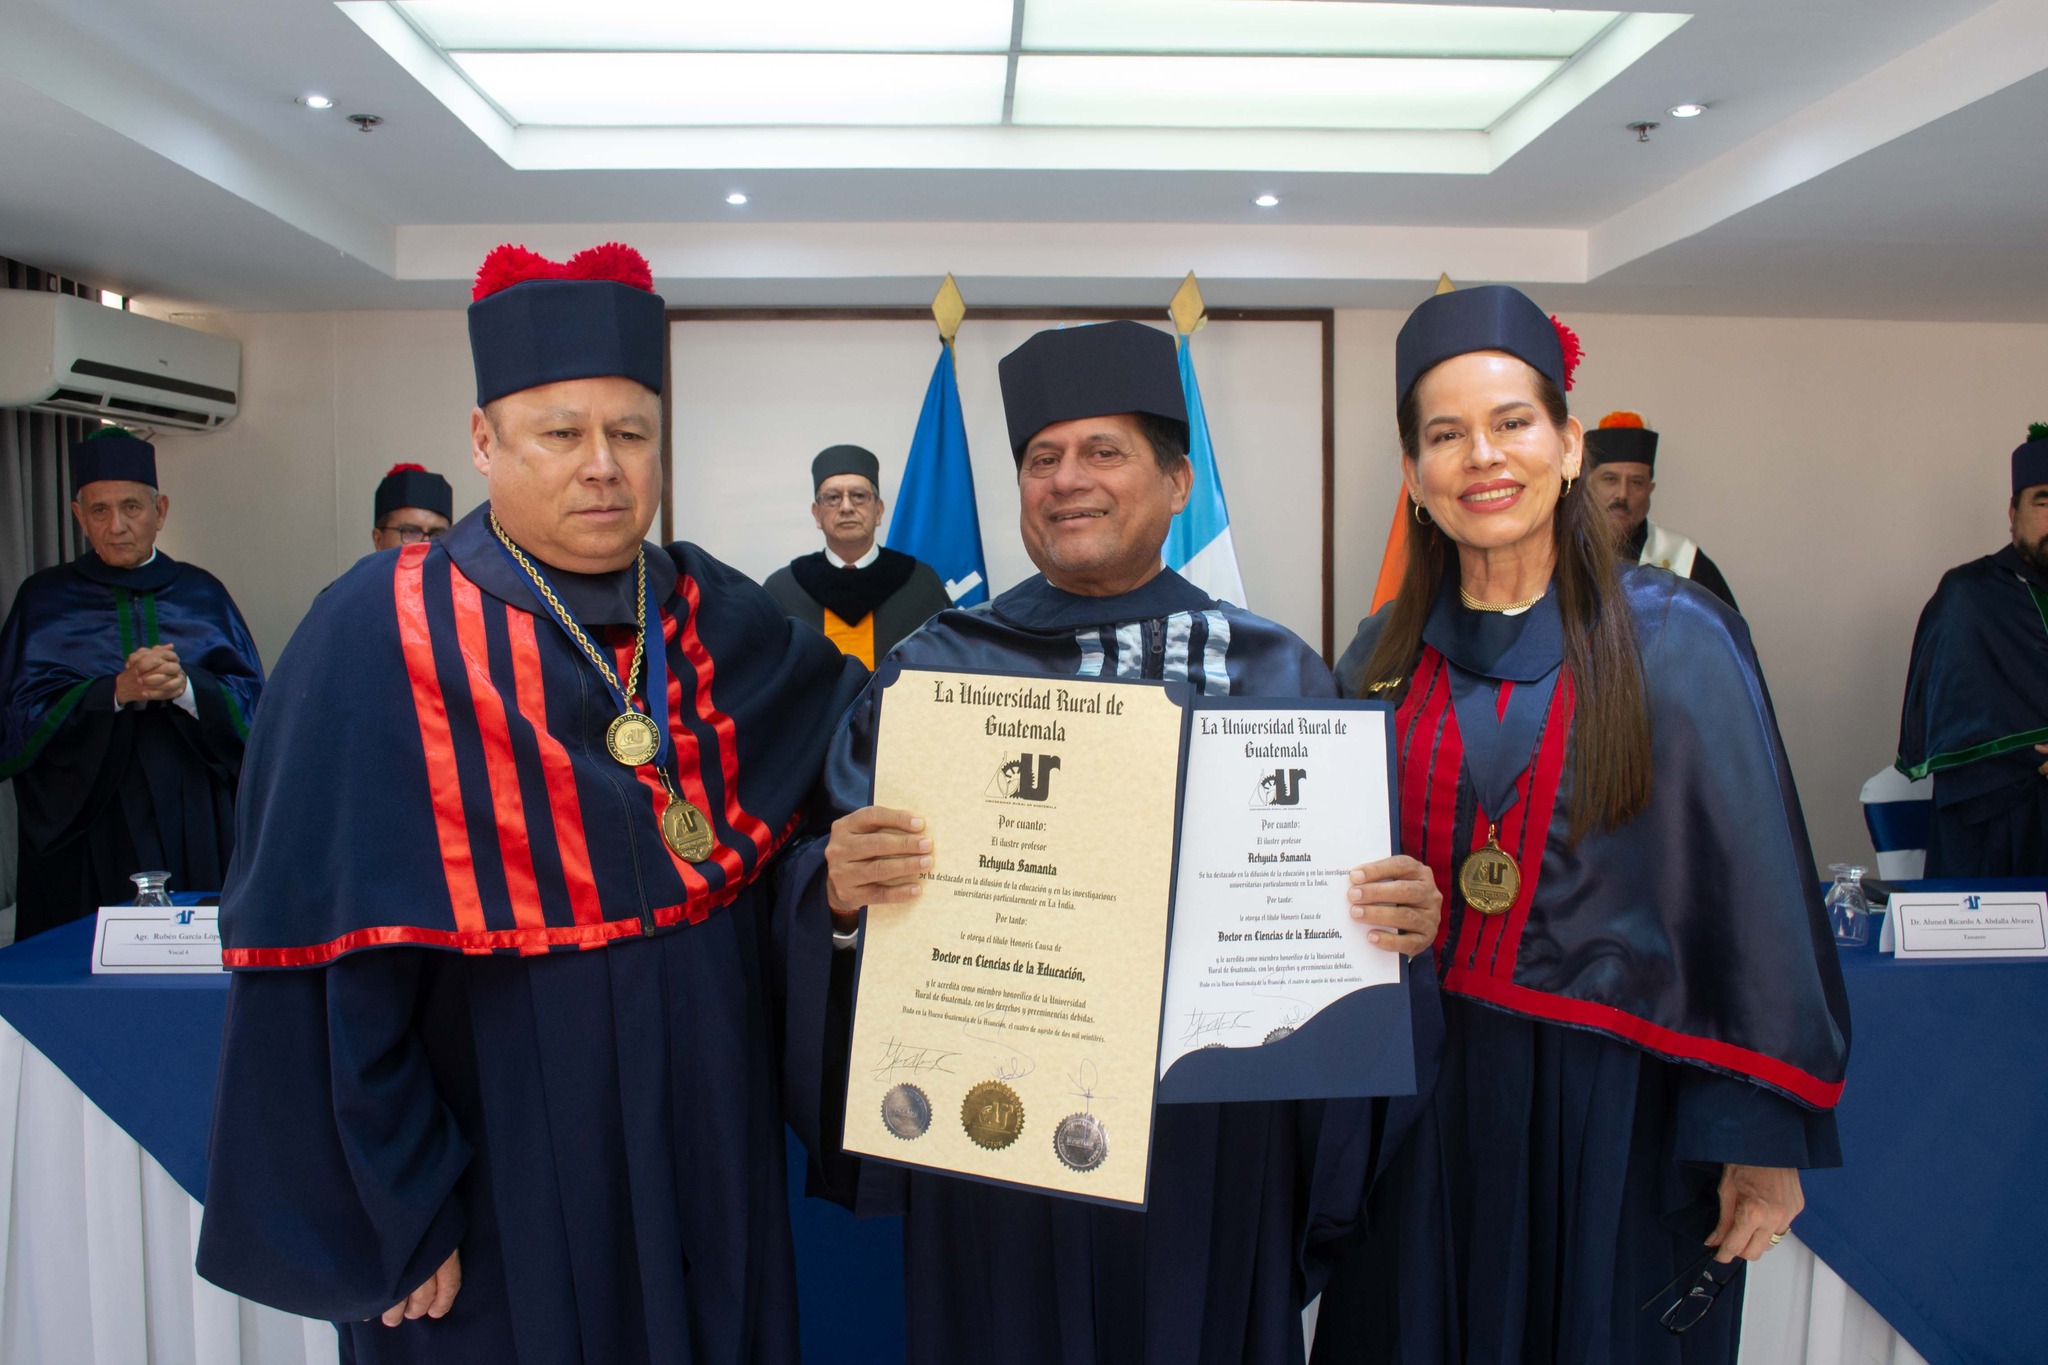 Dr. Achyuta Samanta Conferred Honorary Degrees by Guatemalan Universities